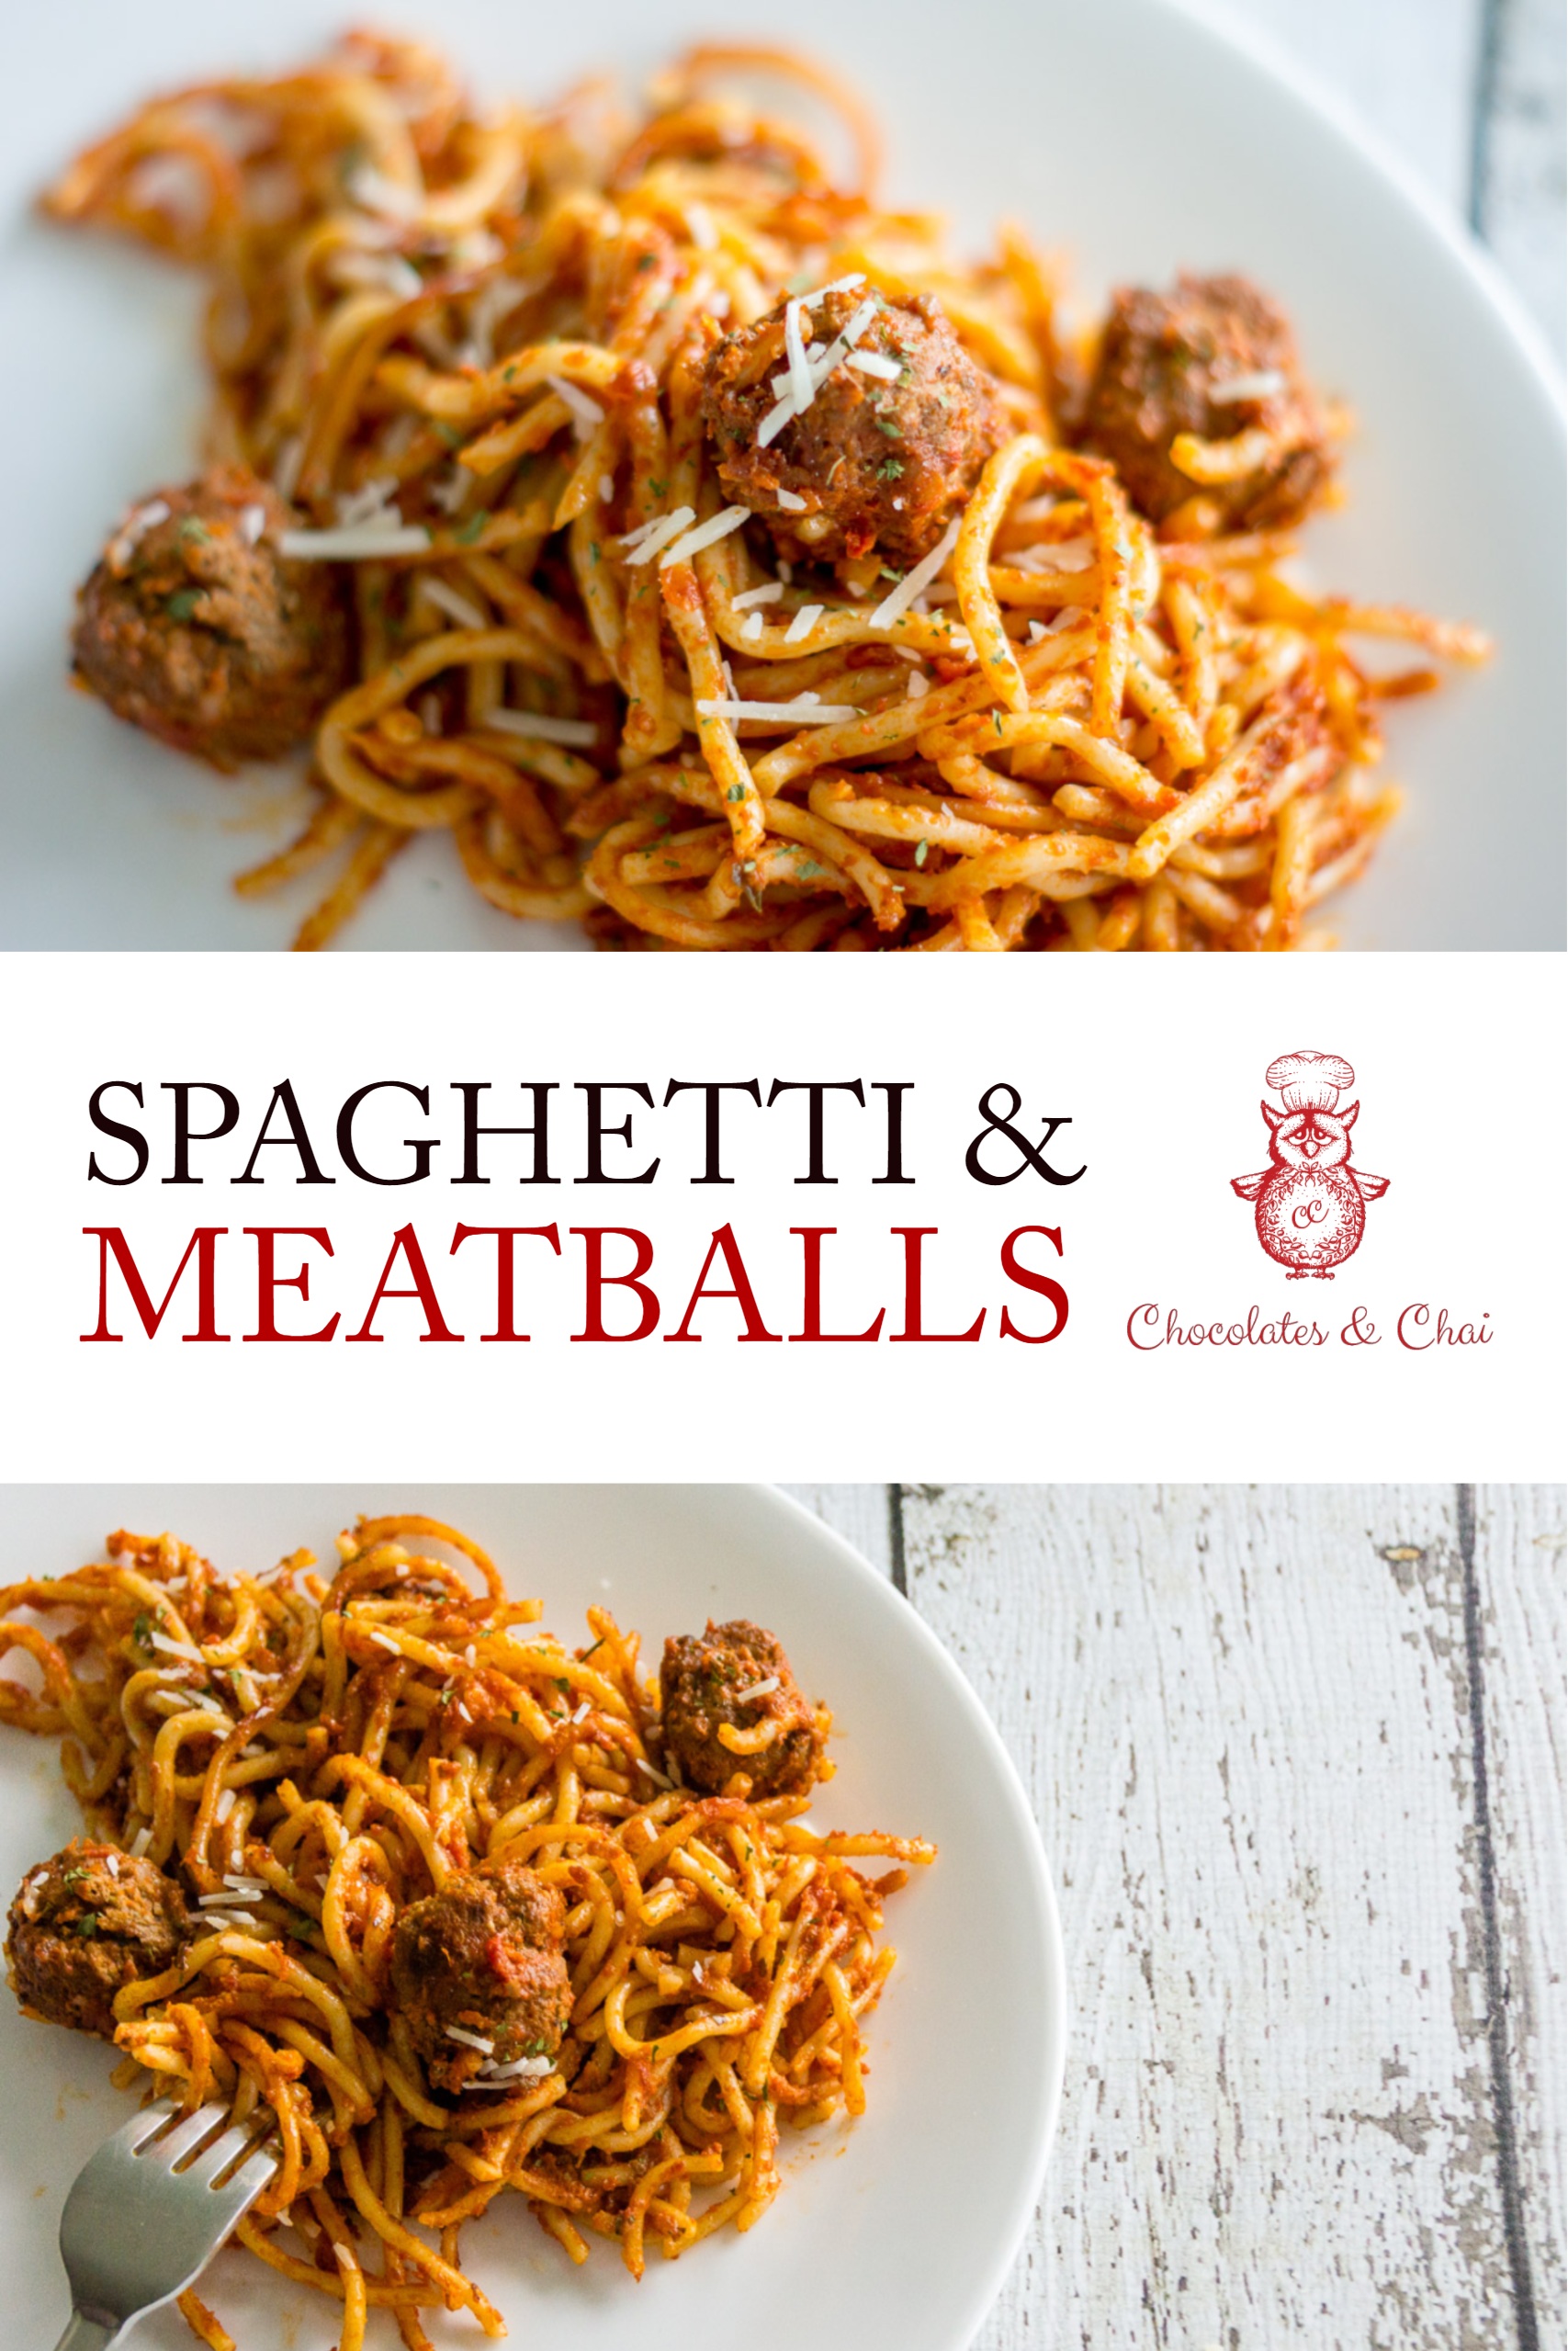 Spaghetti & Meatballs pinterest image showing two horizontal photos.